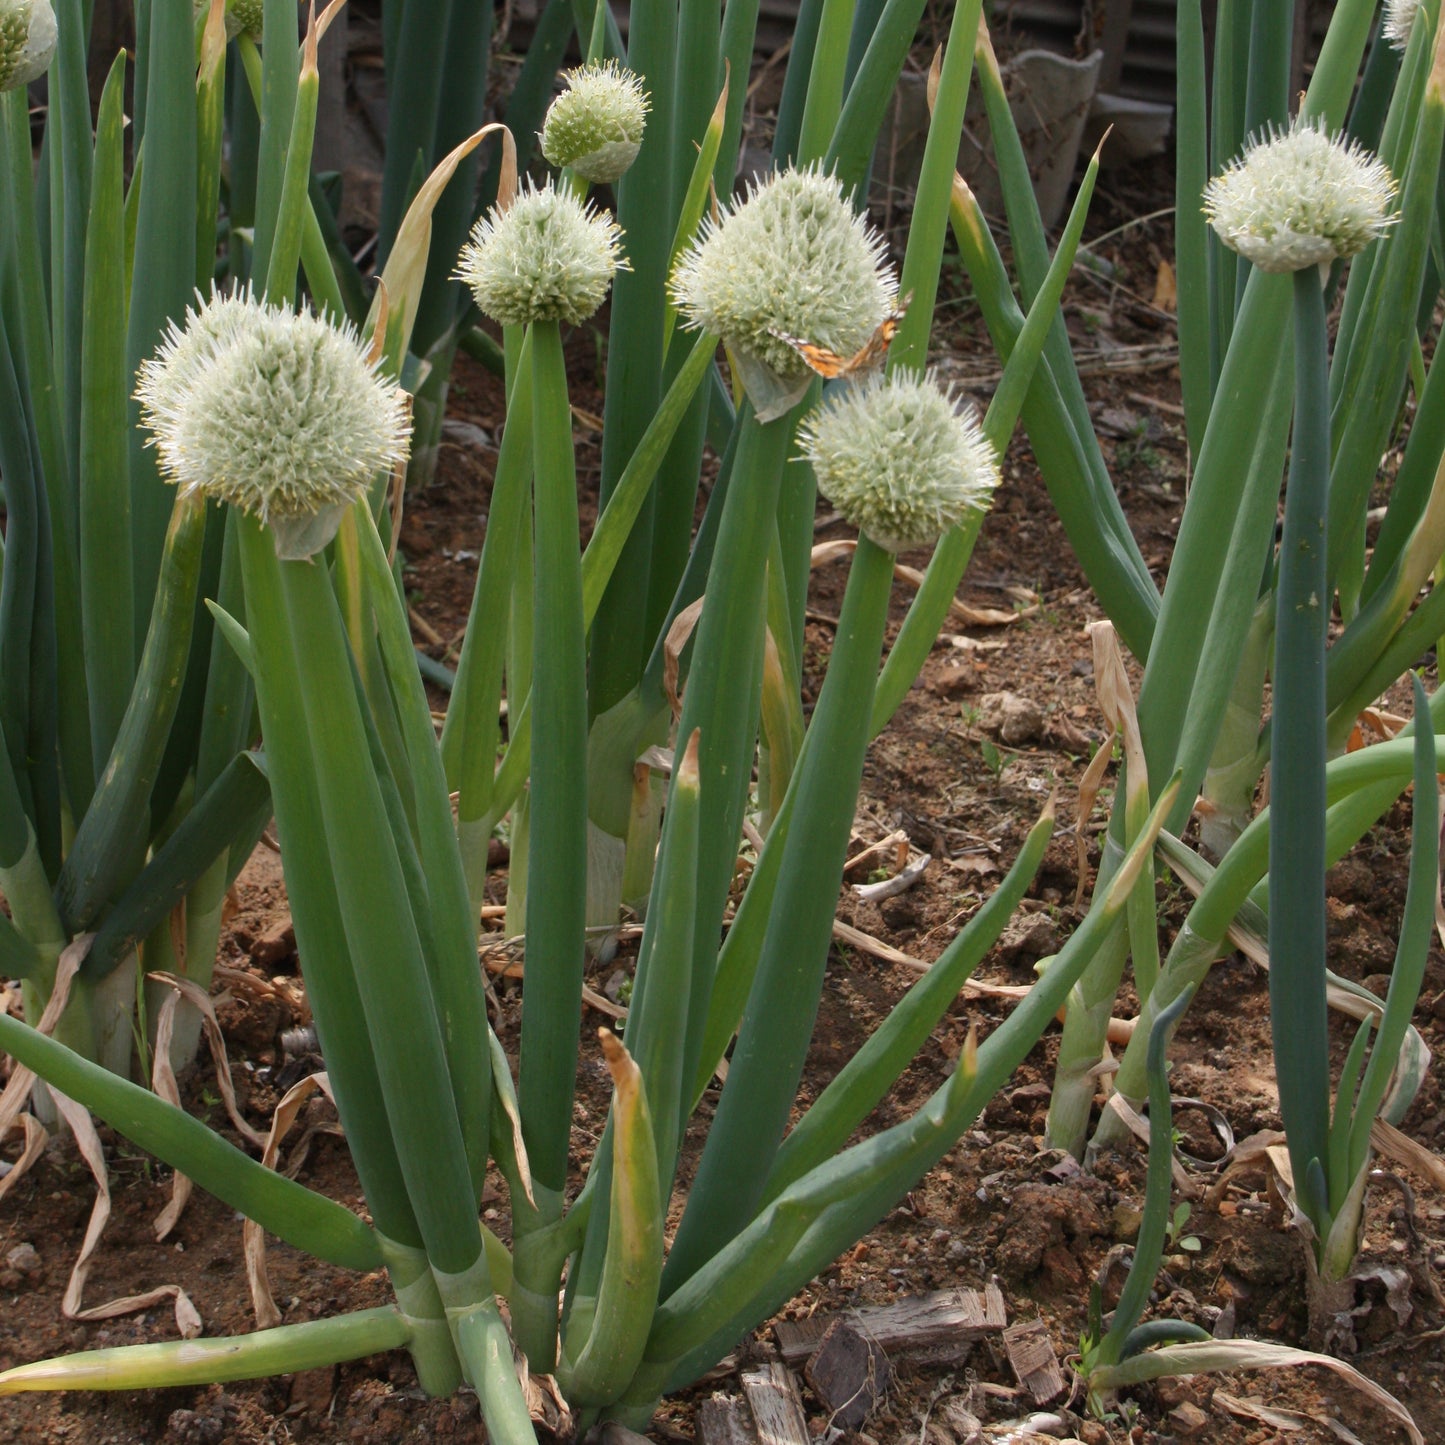 Welsh Onion Seeds (Allium fistulosum)